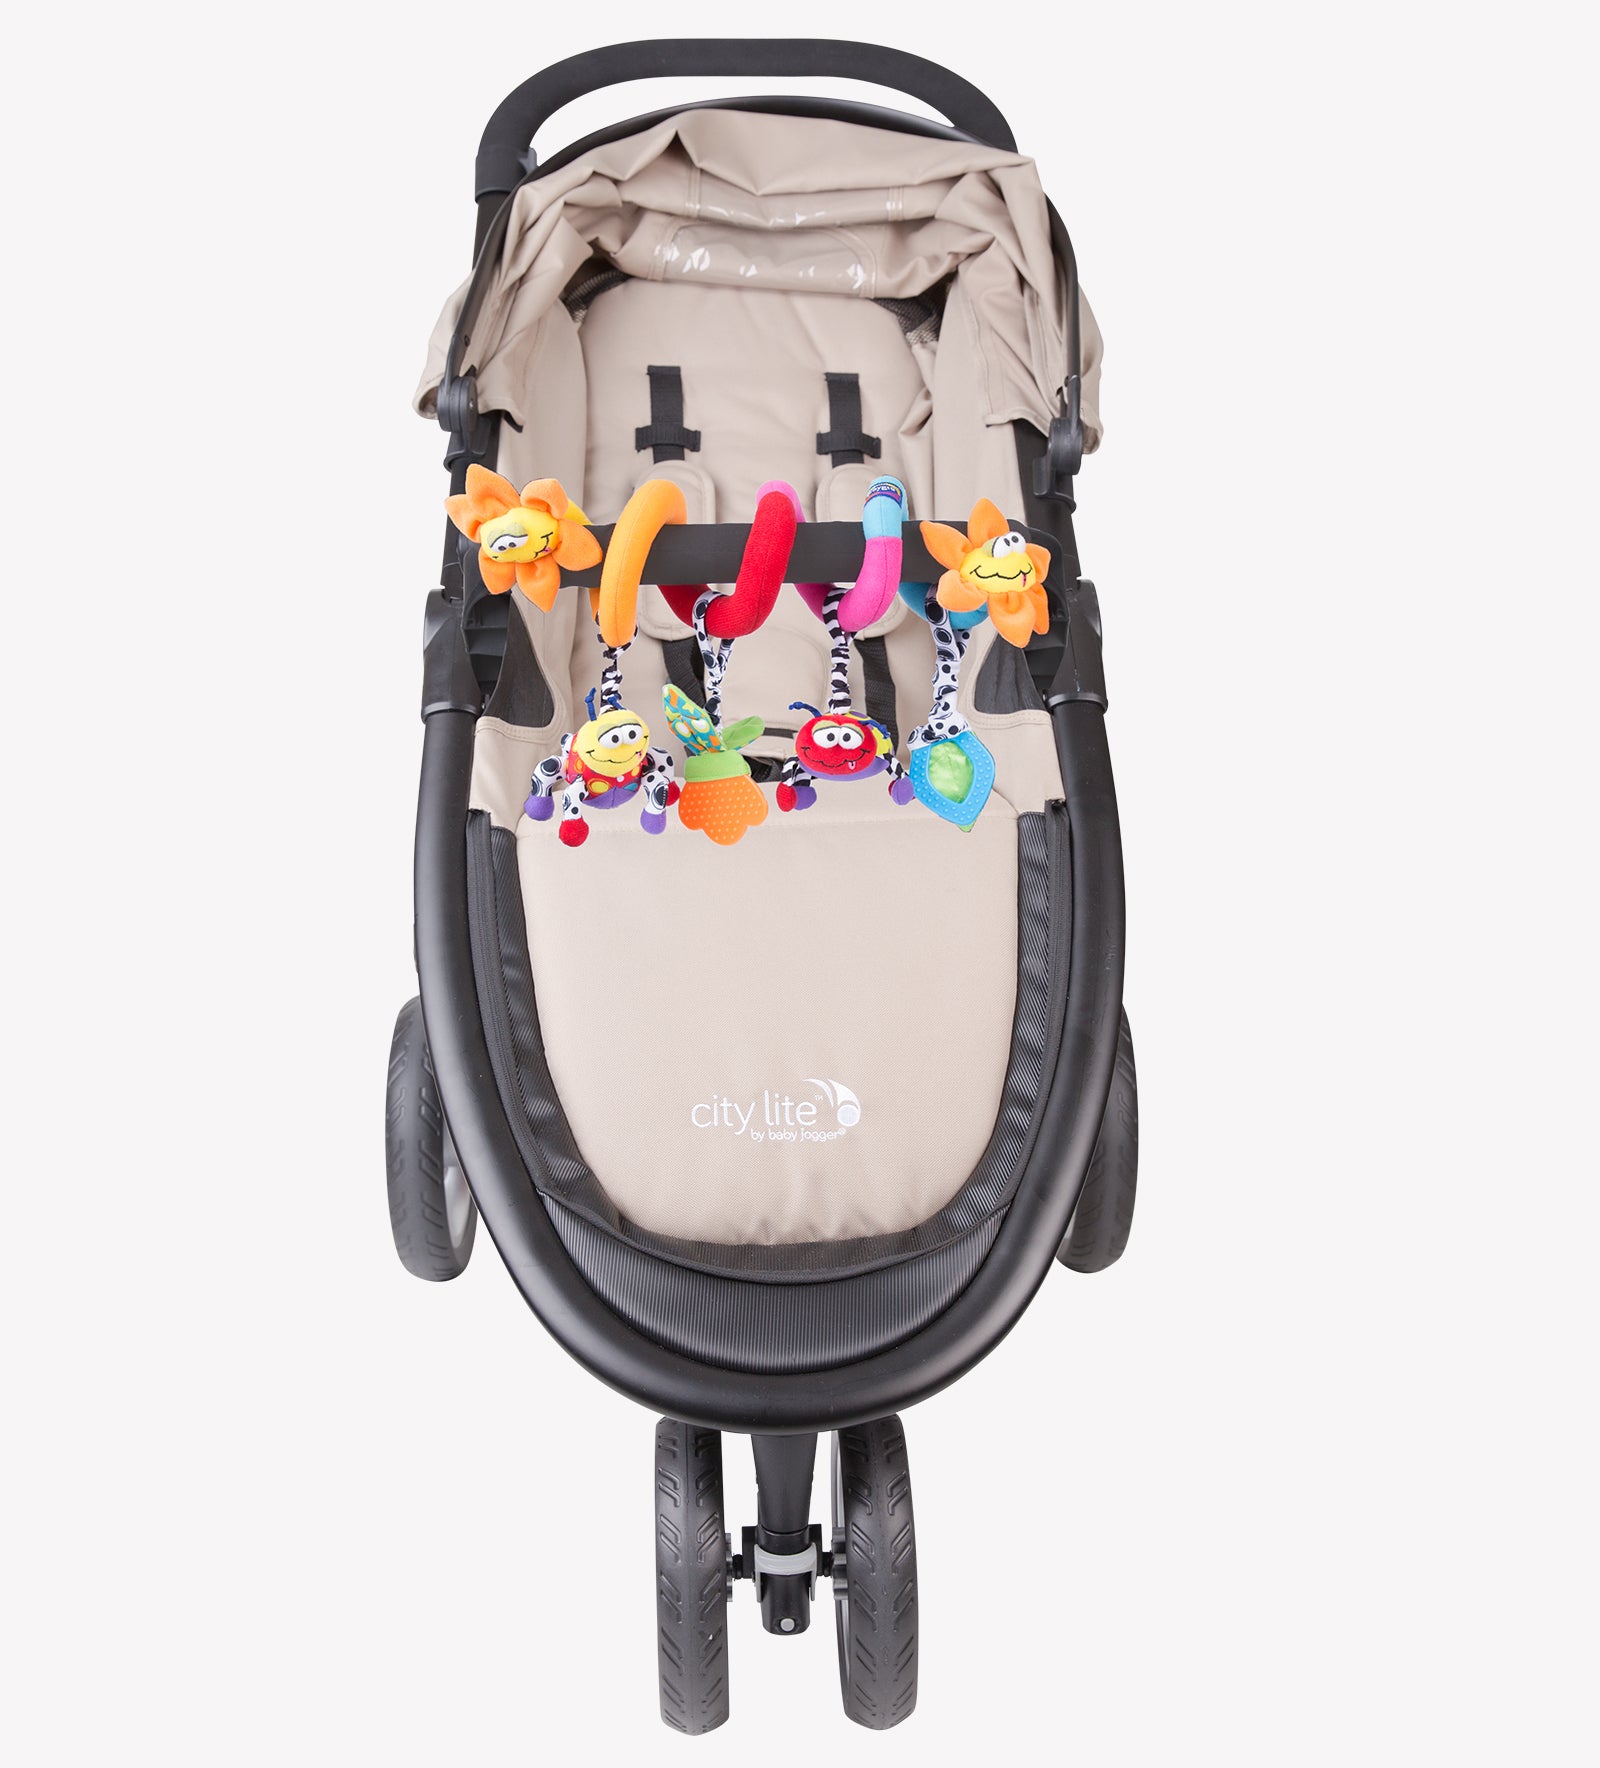 Playgro Garden Twirl is twired on the baby stroller bumper bar